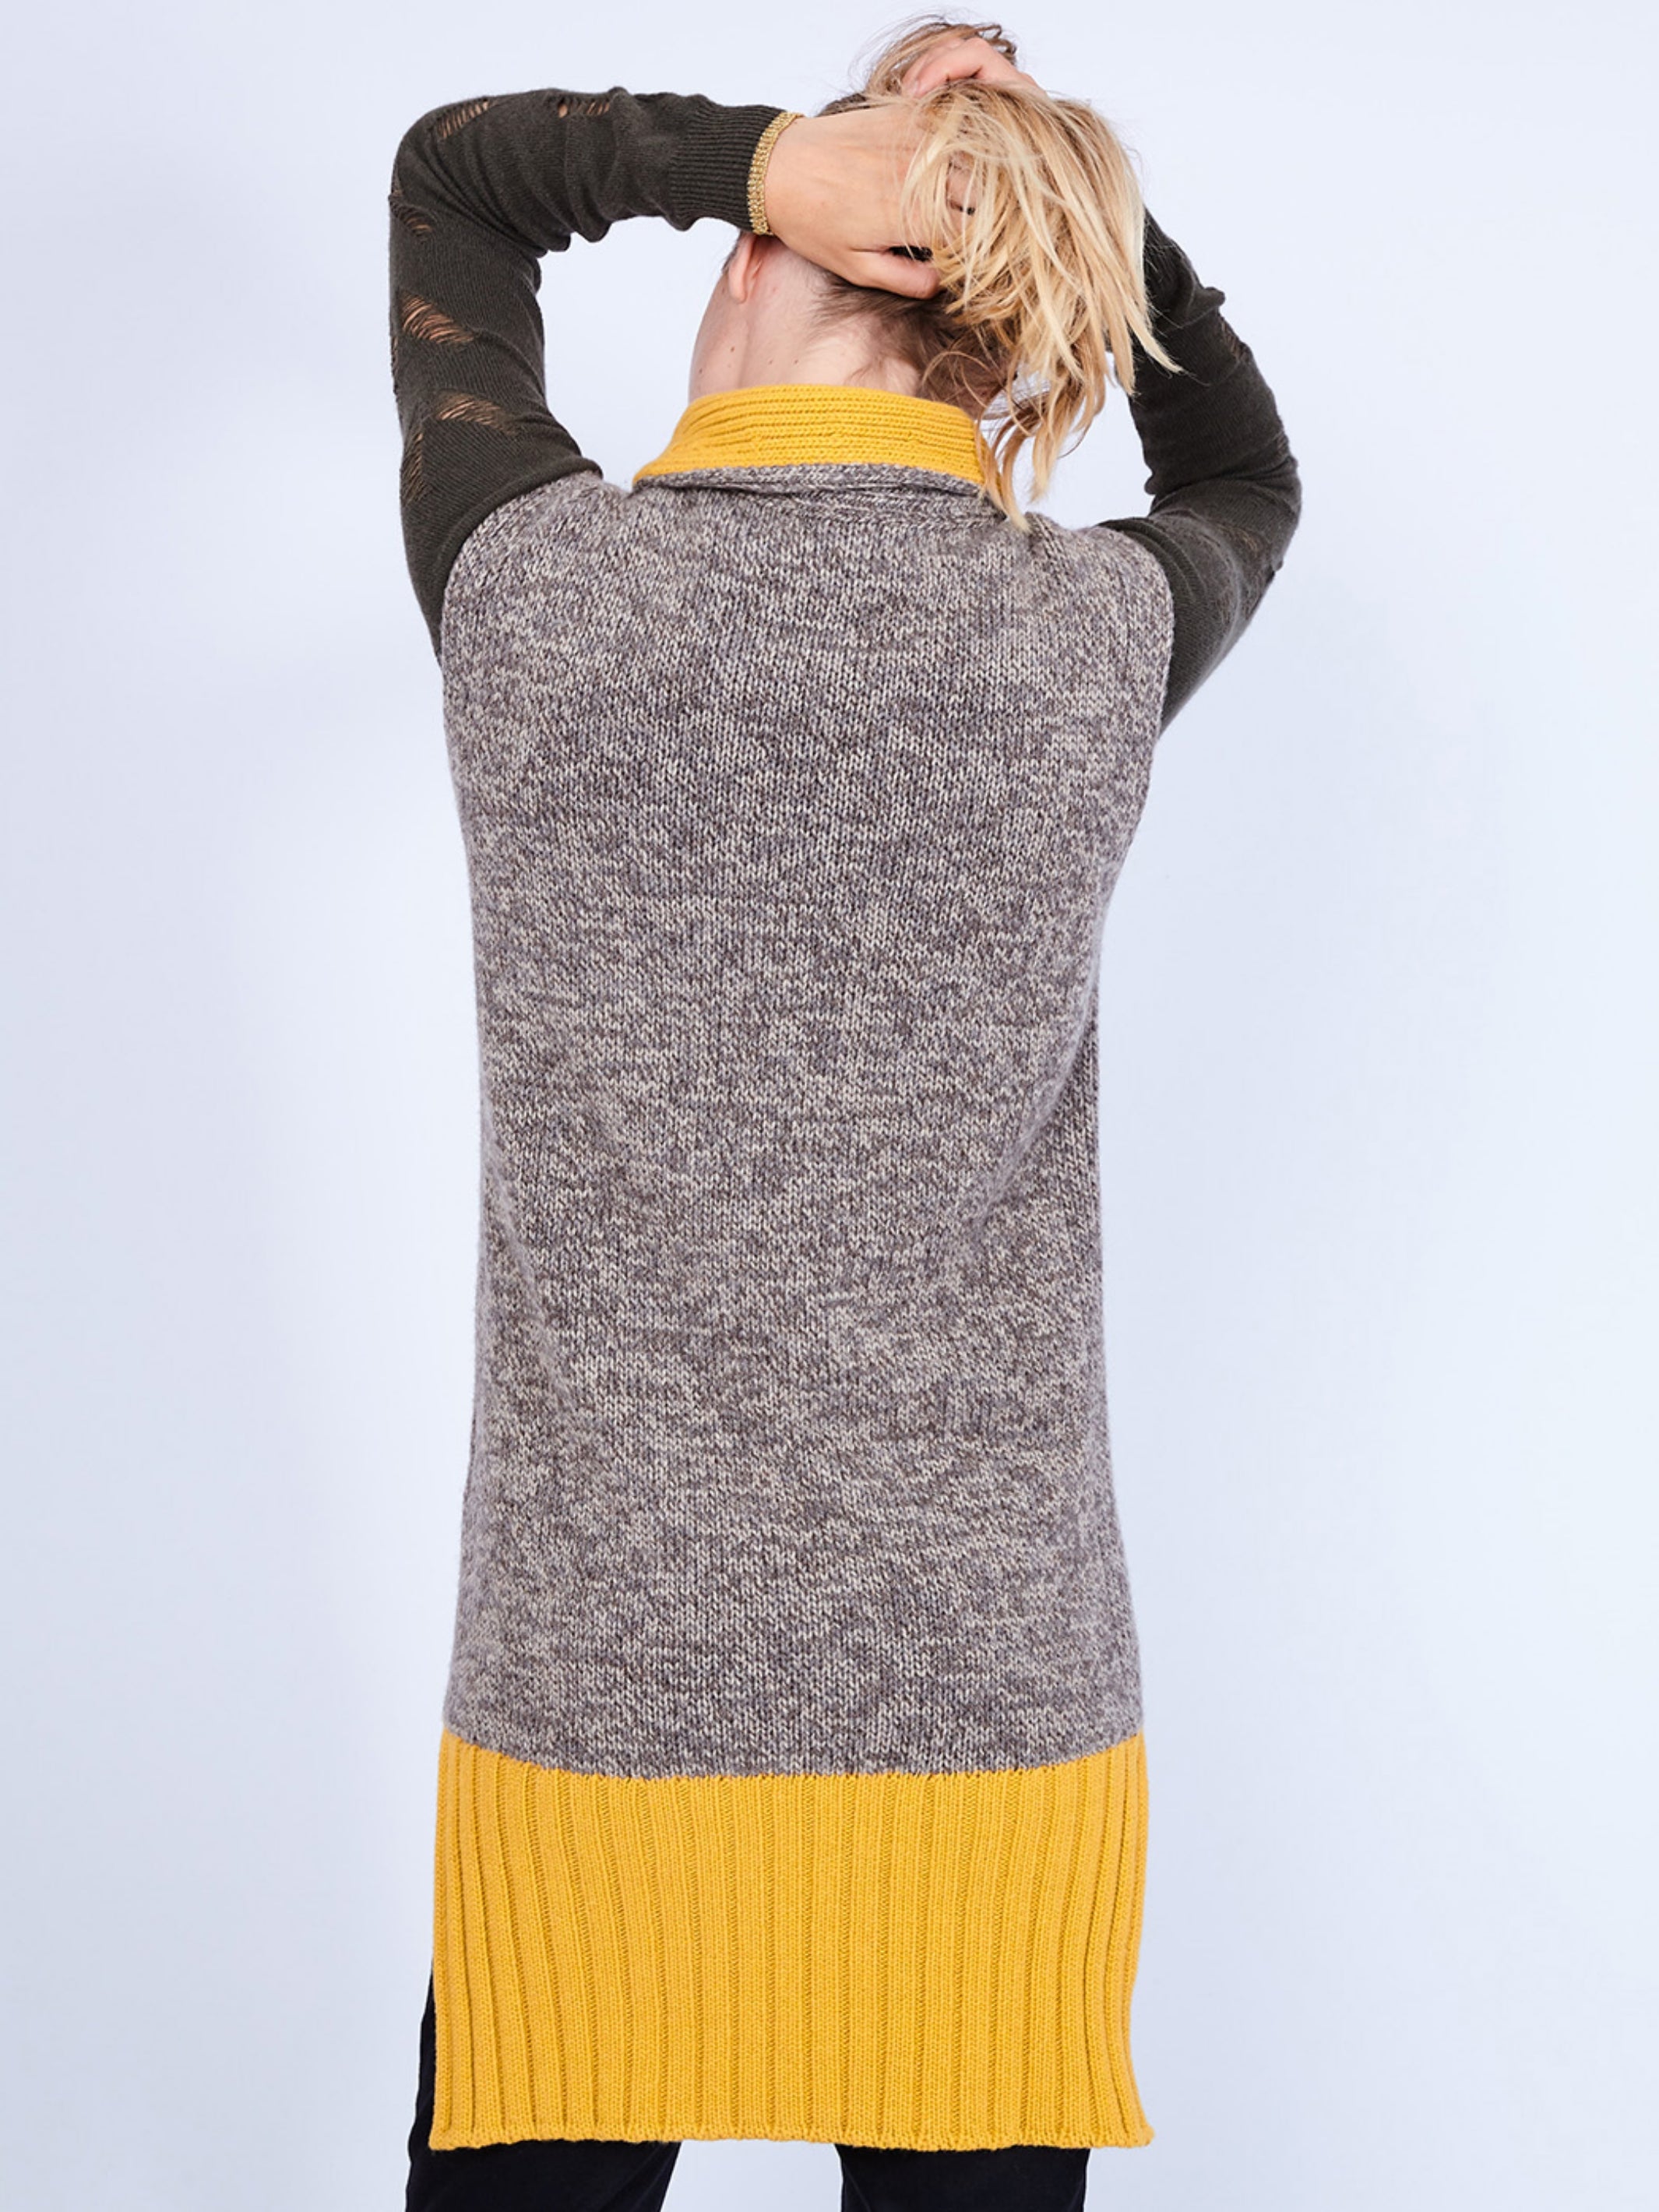 Warm sweater dress in regenerated cashmere